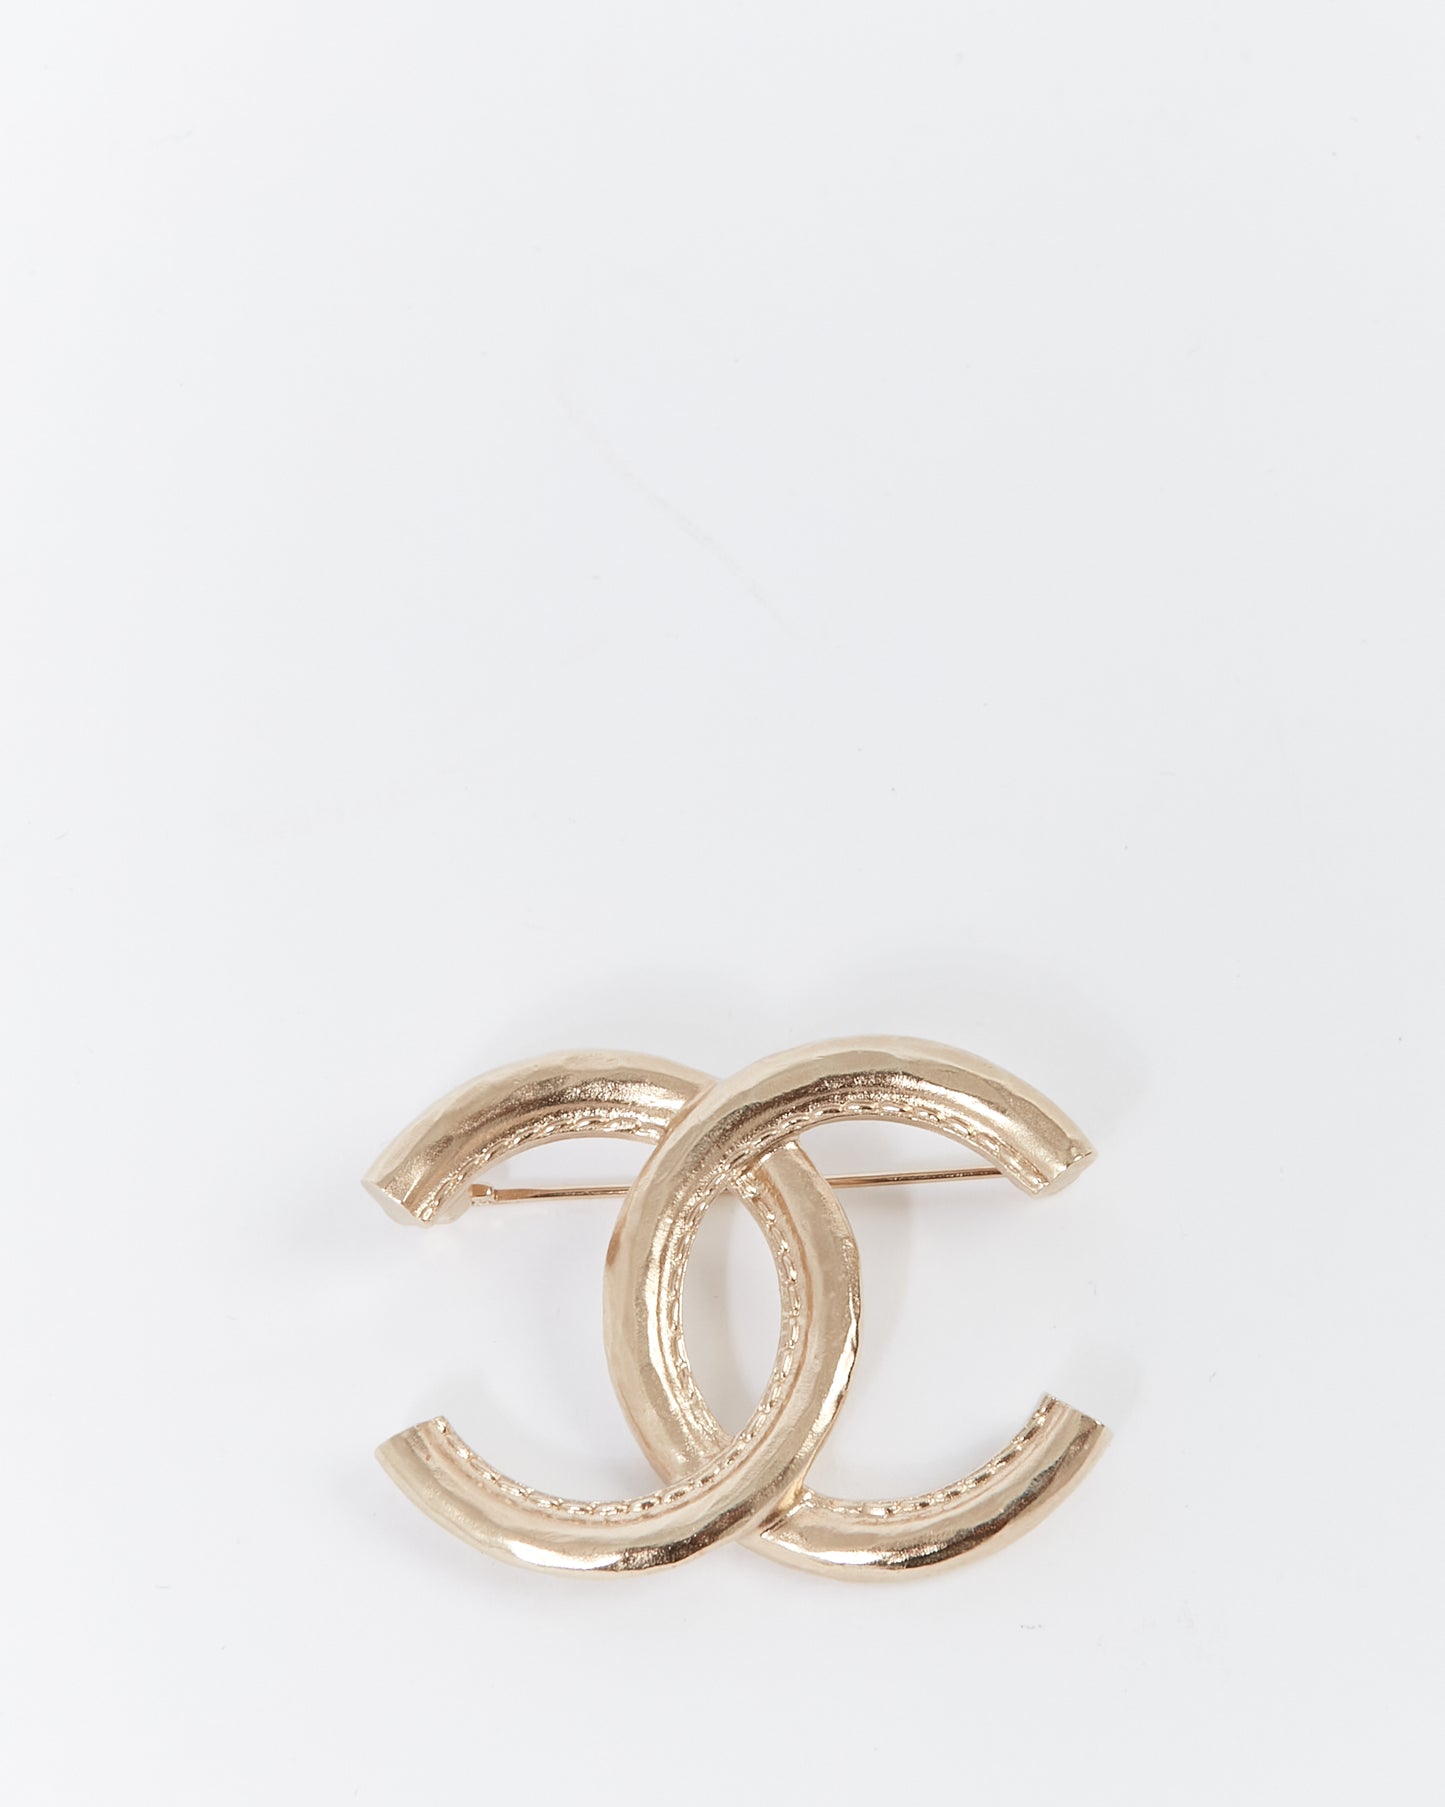 Broche logo CC dorée Chanel